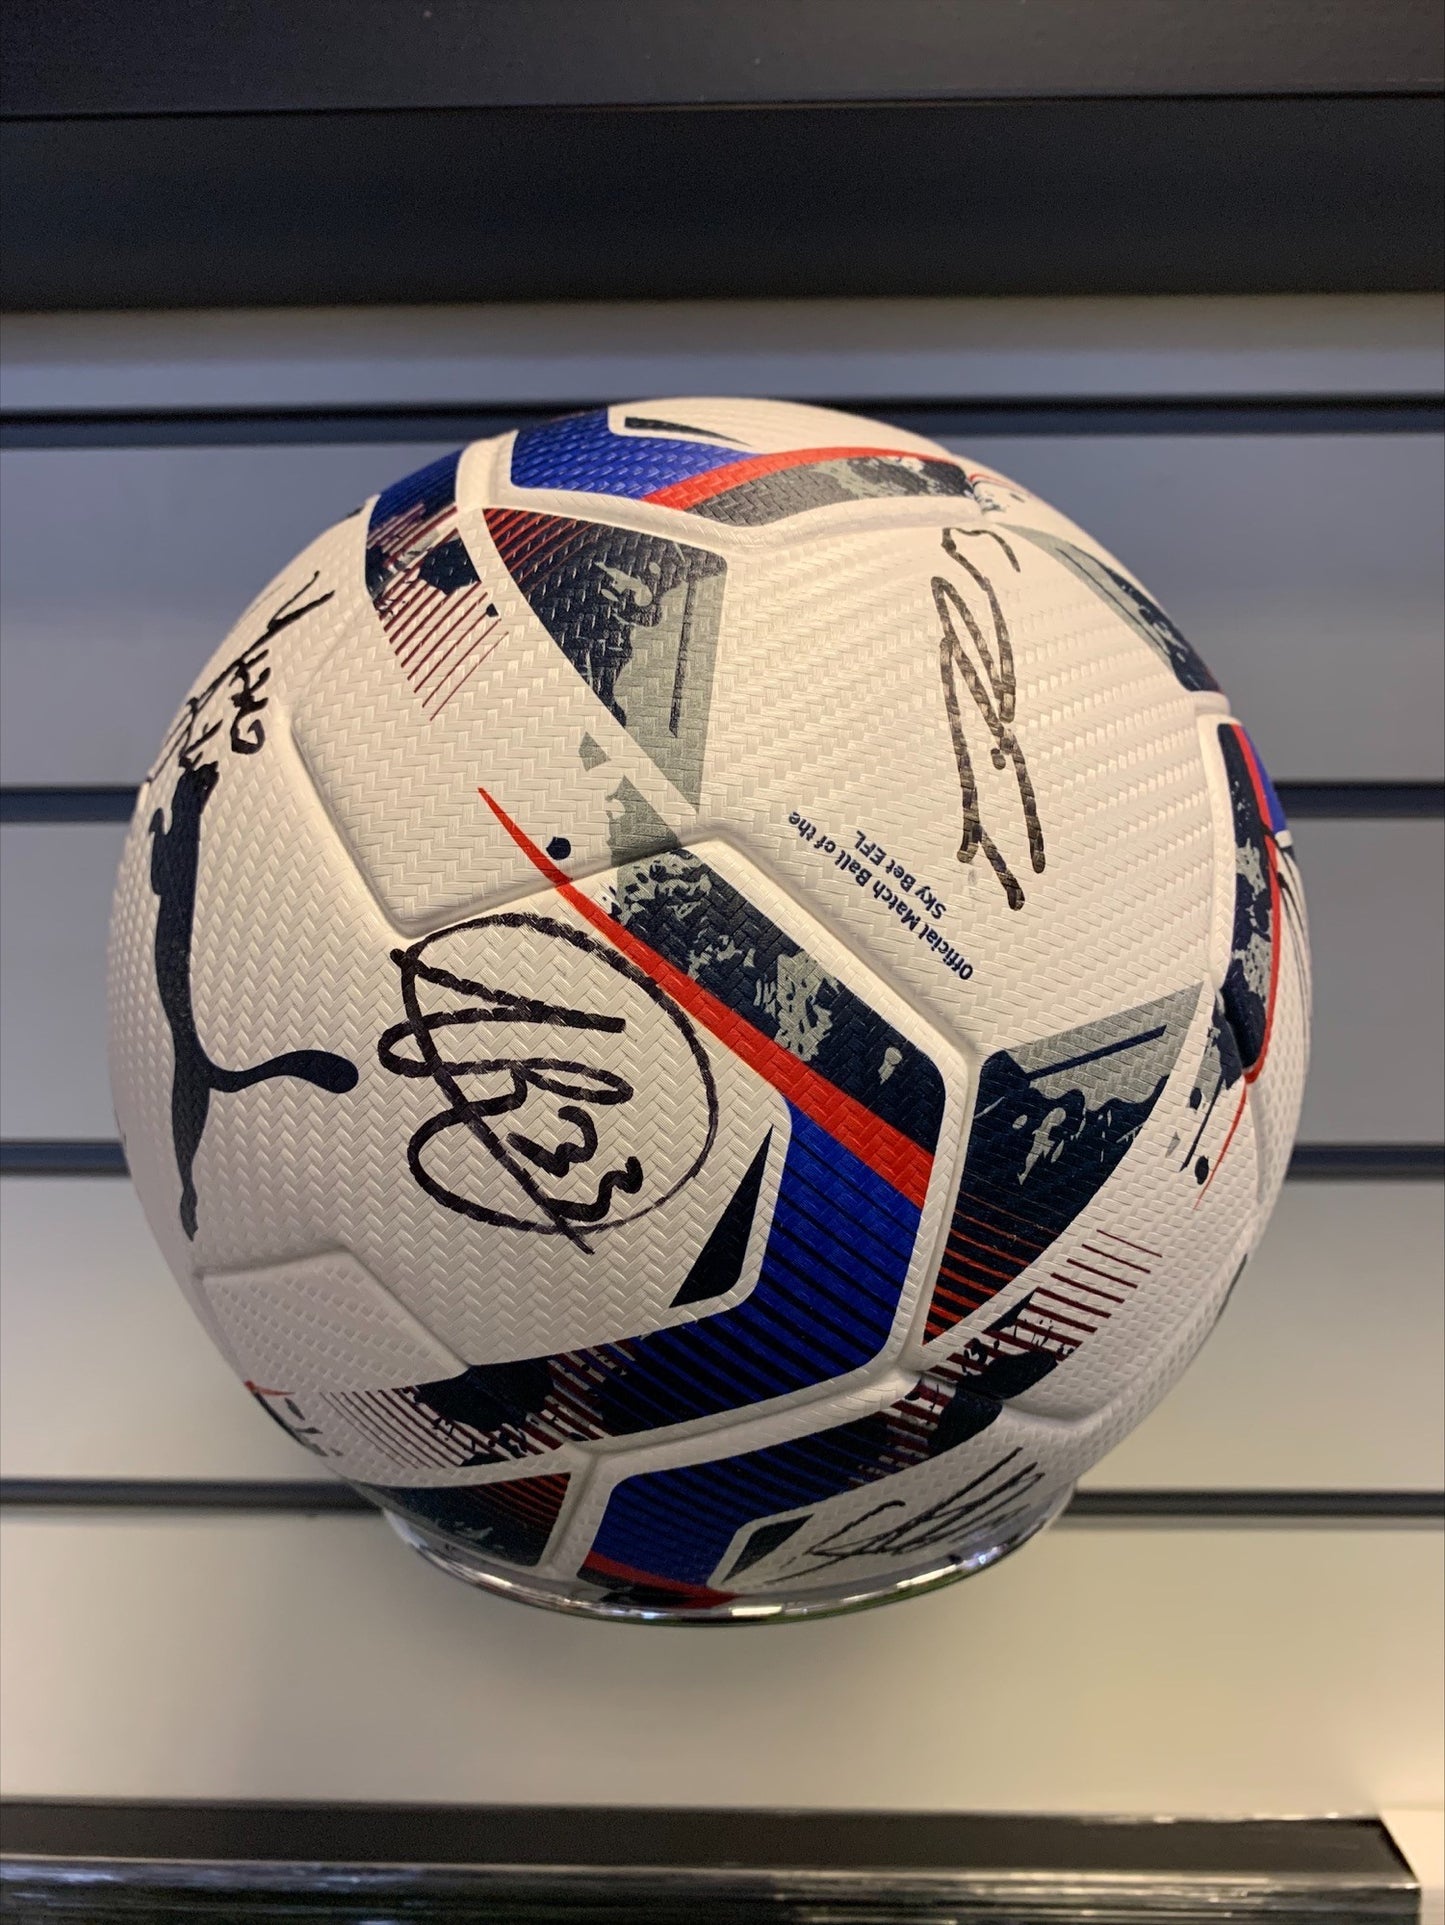 2021/22 Fulham -  multi-signed "OFFICIAL EFL" match ball - FFC memorabilia, gift, display